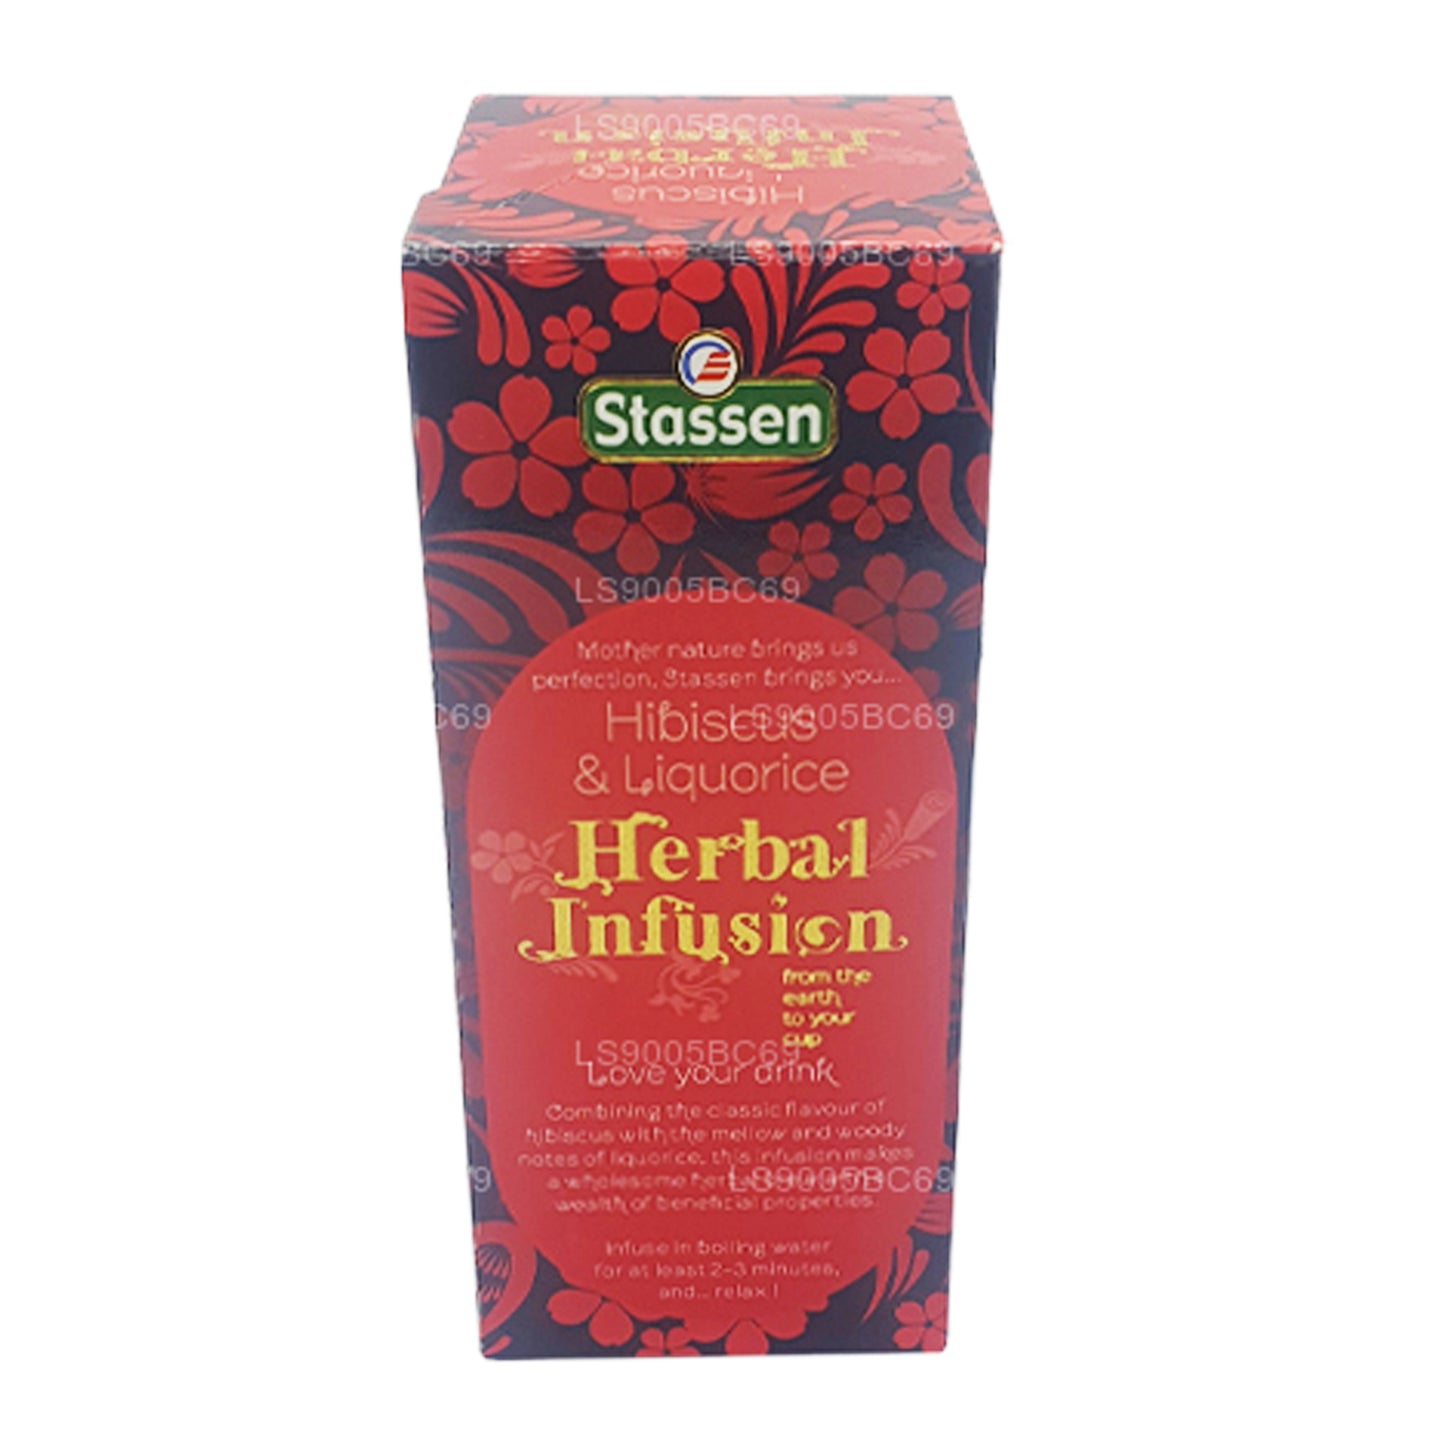 Stassen Hibiscus and Liquorice Herbal Infusion Tea (37.5g) 25 Tea Bags